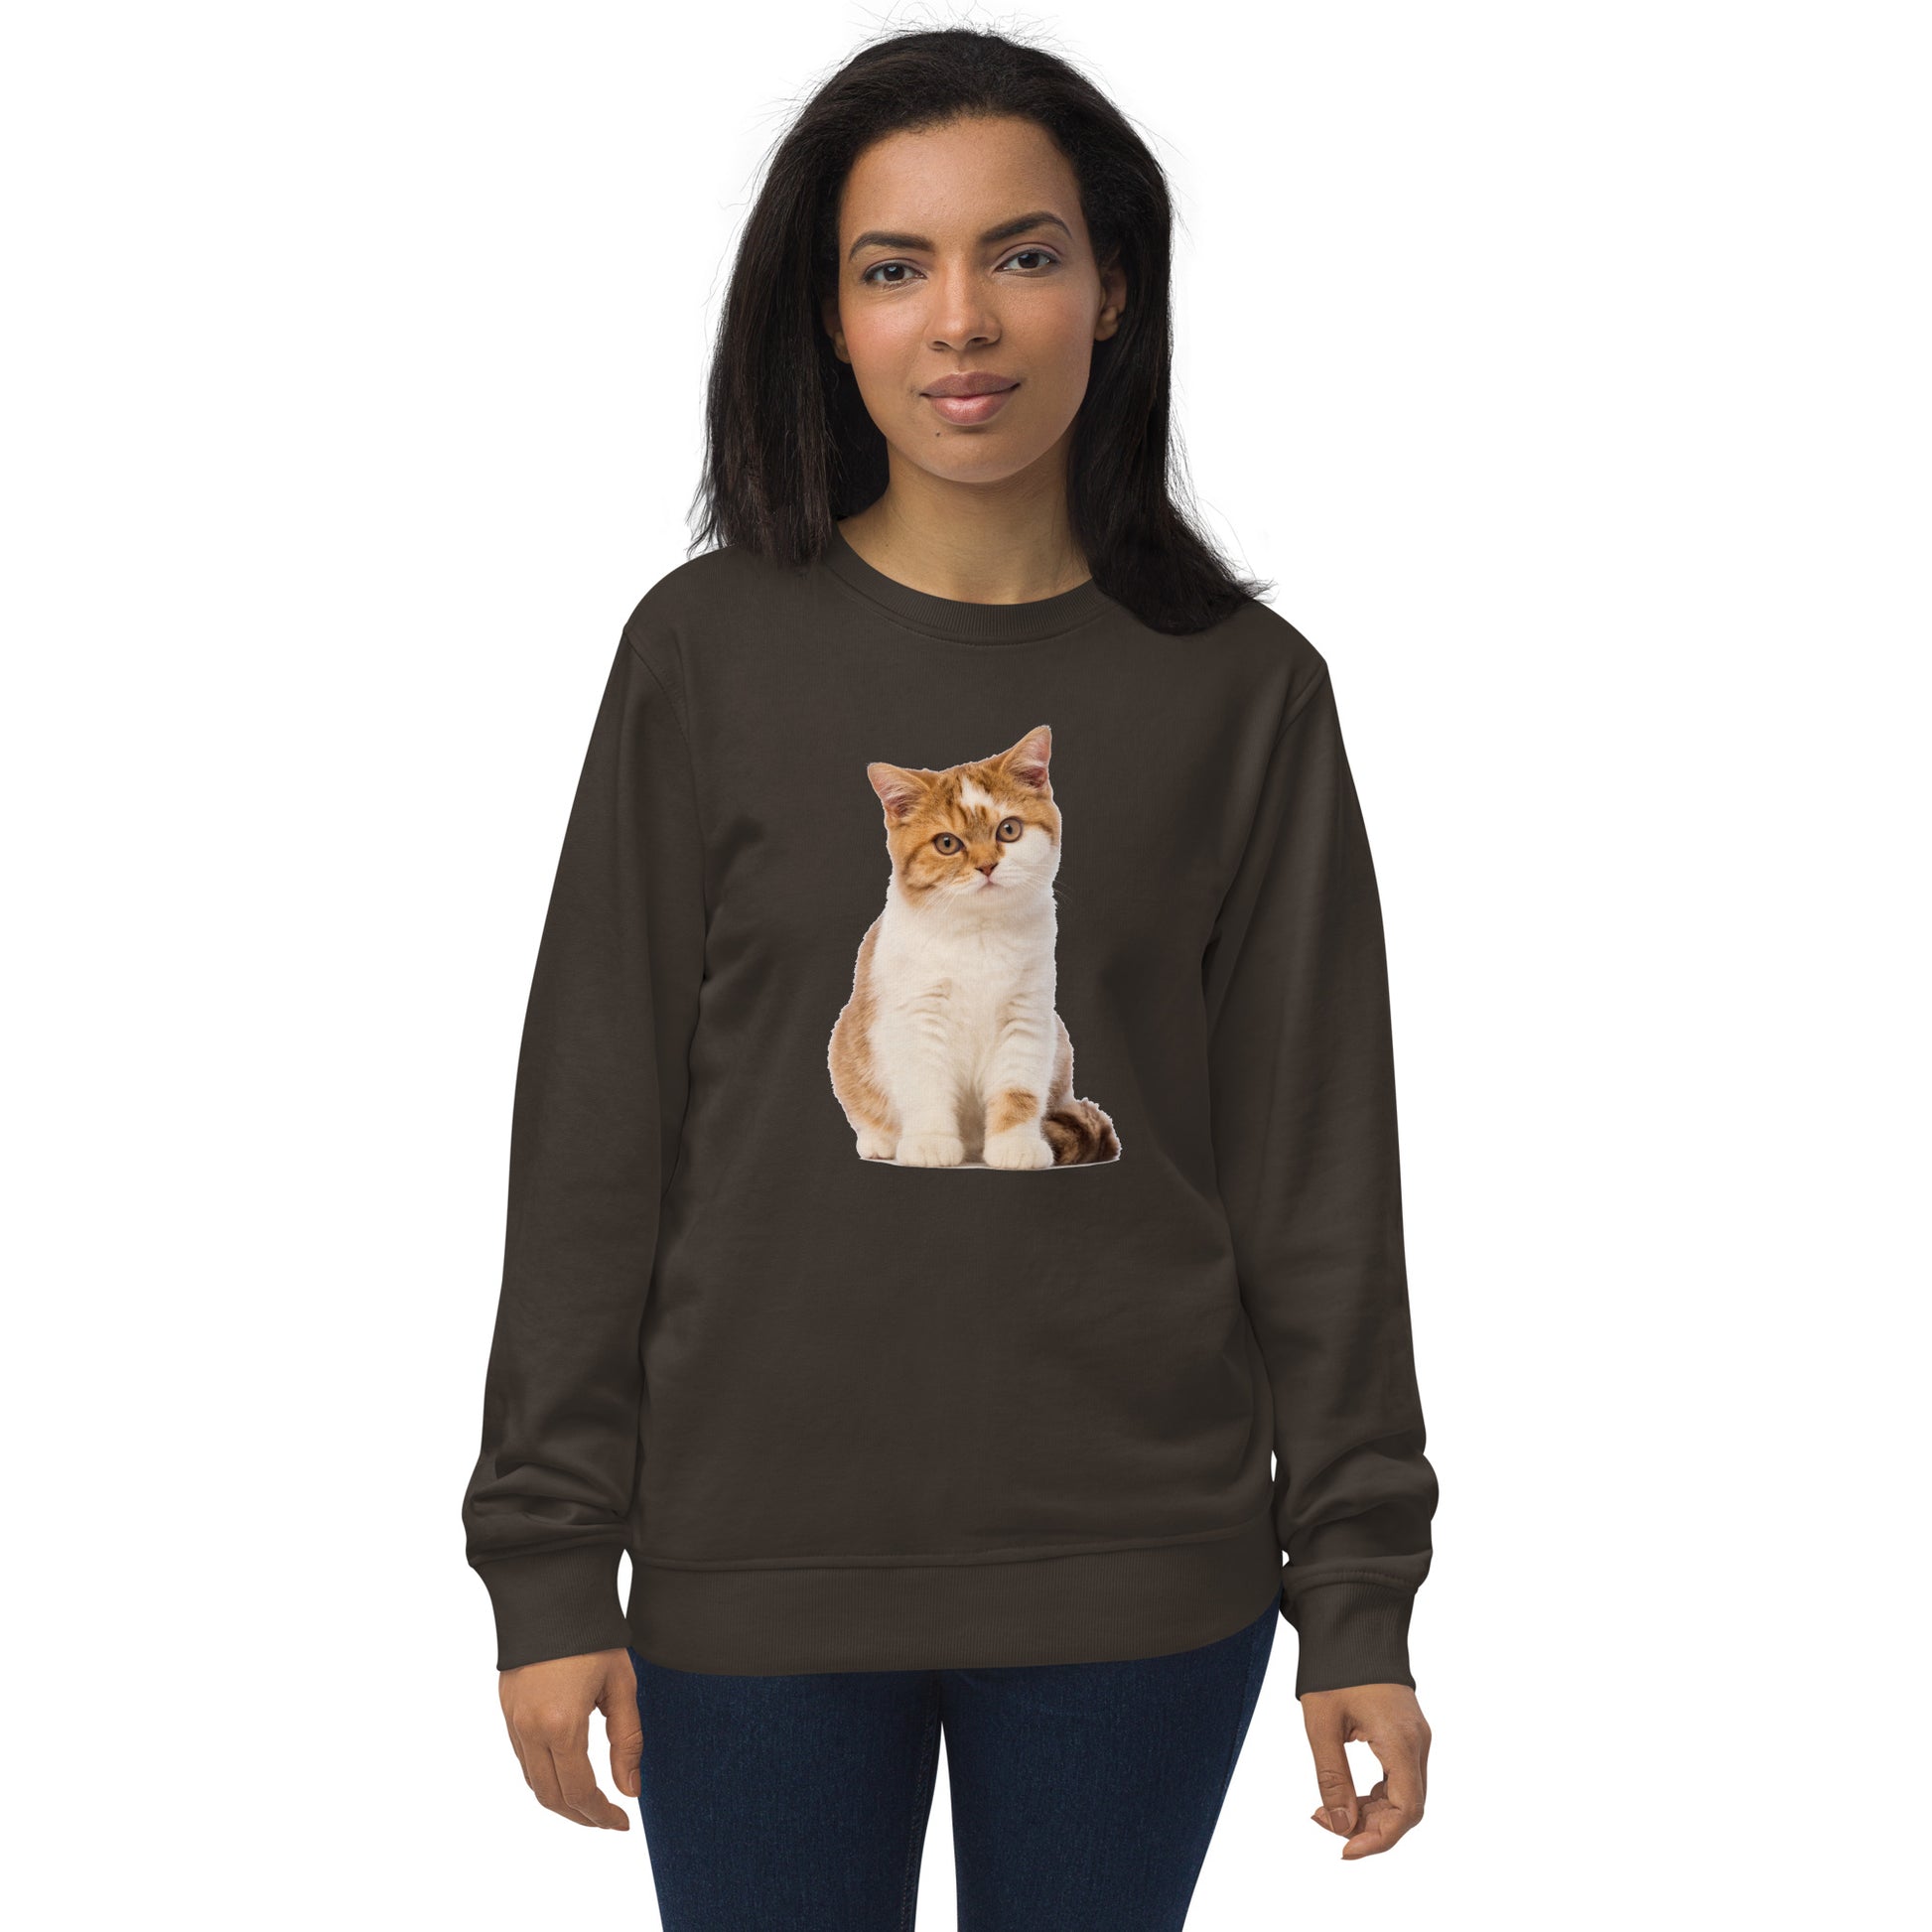 Cat Organic Sweatshirt, Kitten  Graphic Crewneck Fleece Cotton Sweater Jumper Pullover Men Women Adult Aesthetic Top Starcove Fashion